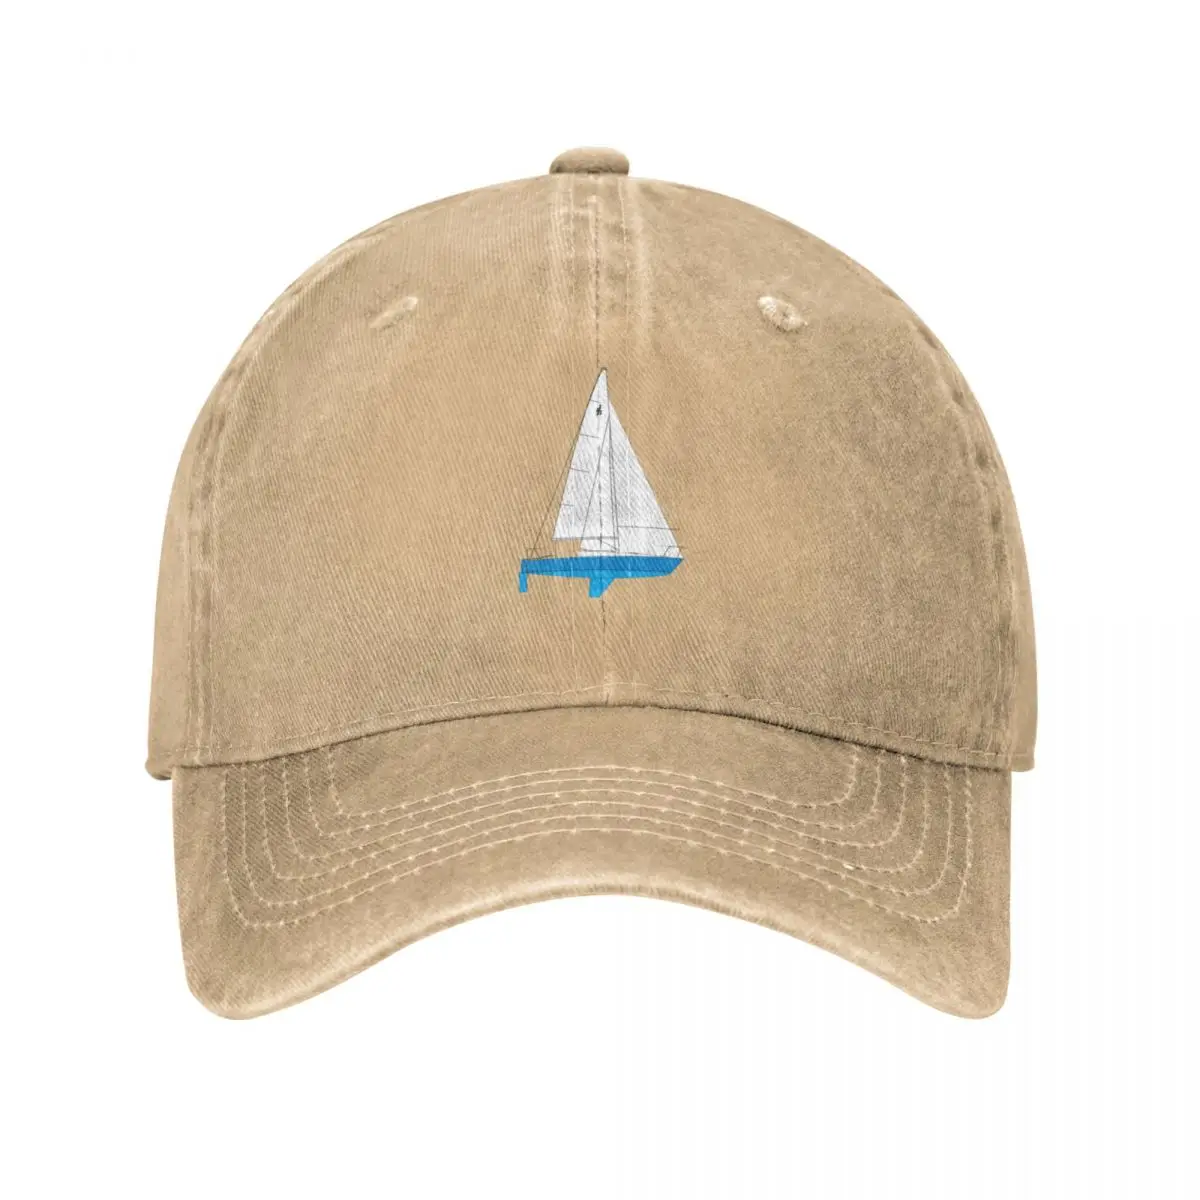 

J/24 Sailboat Cap Cowboy Hat streetwear sun hat for children fishing hat hat luxury brand hat man Women's